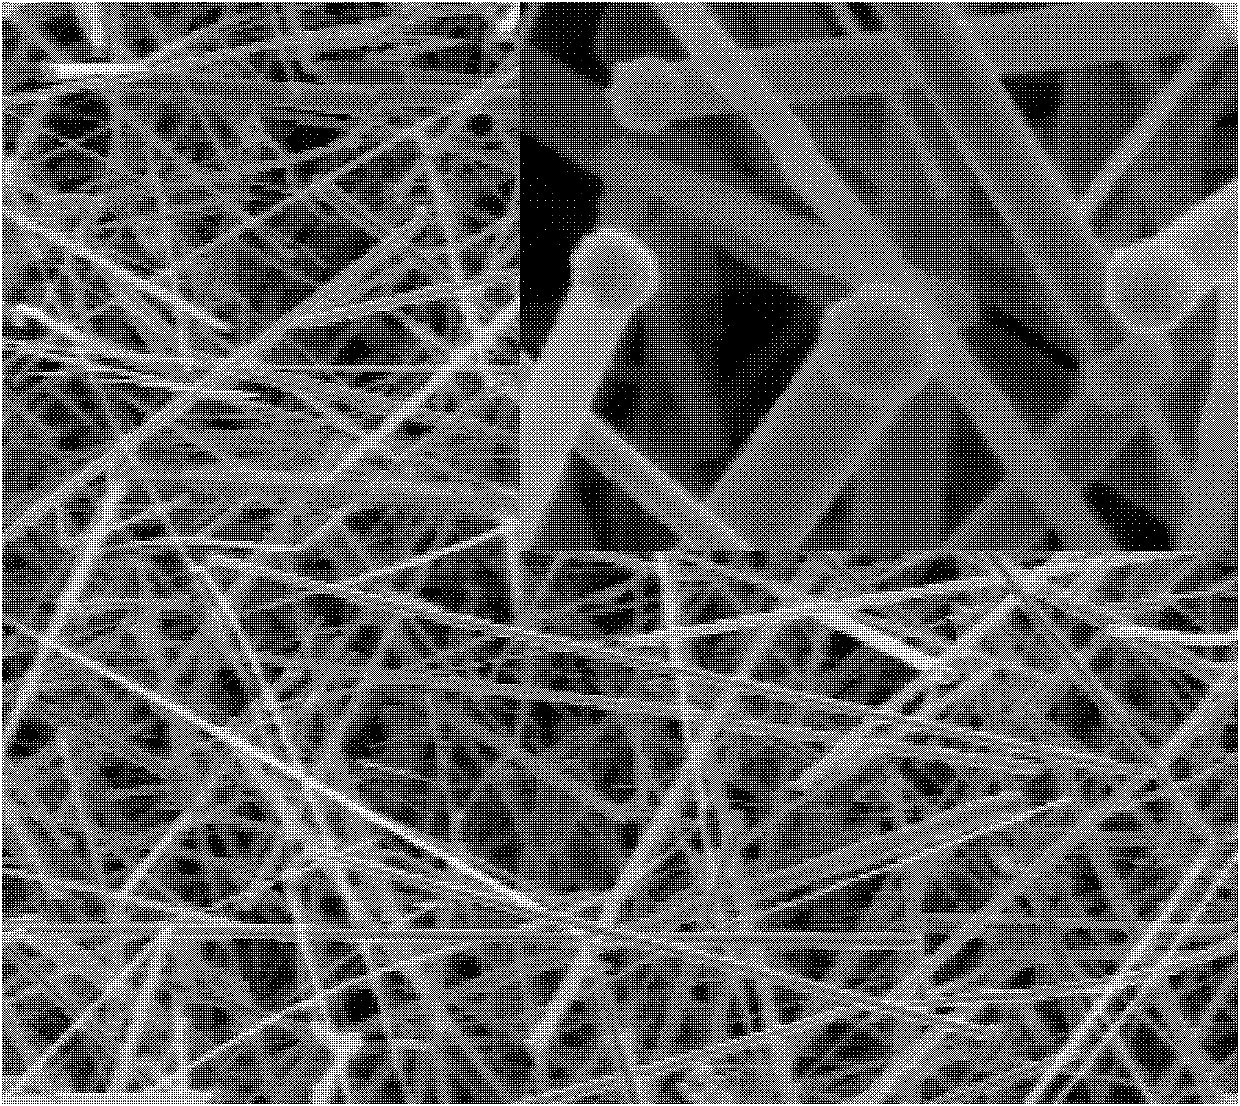 Method for preparing p-type IIB-VIA family quasi-one-dimensional semiconductor nano material by chemical vapor-deposition in-situ doping